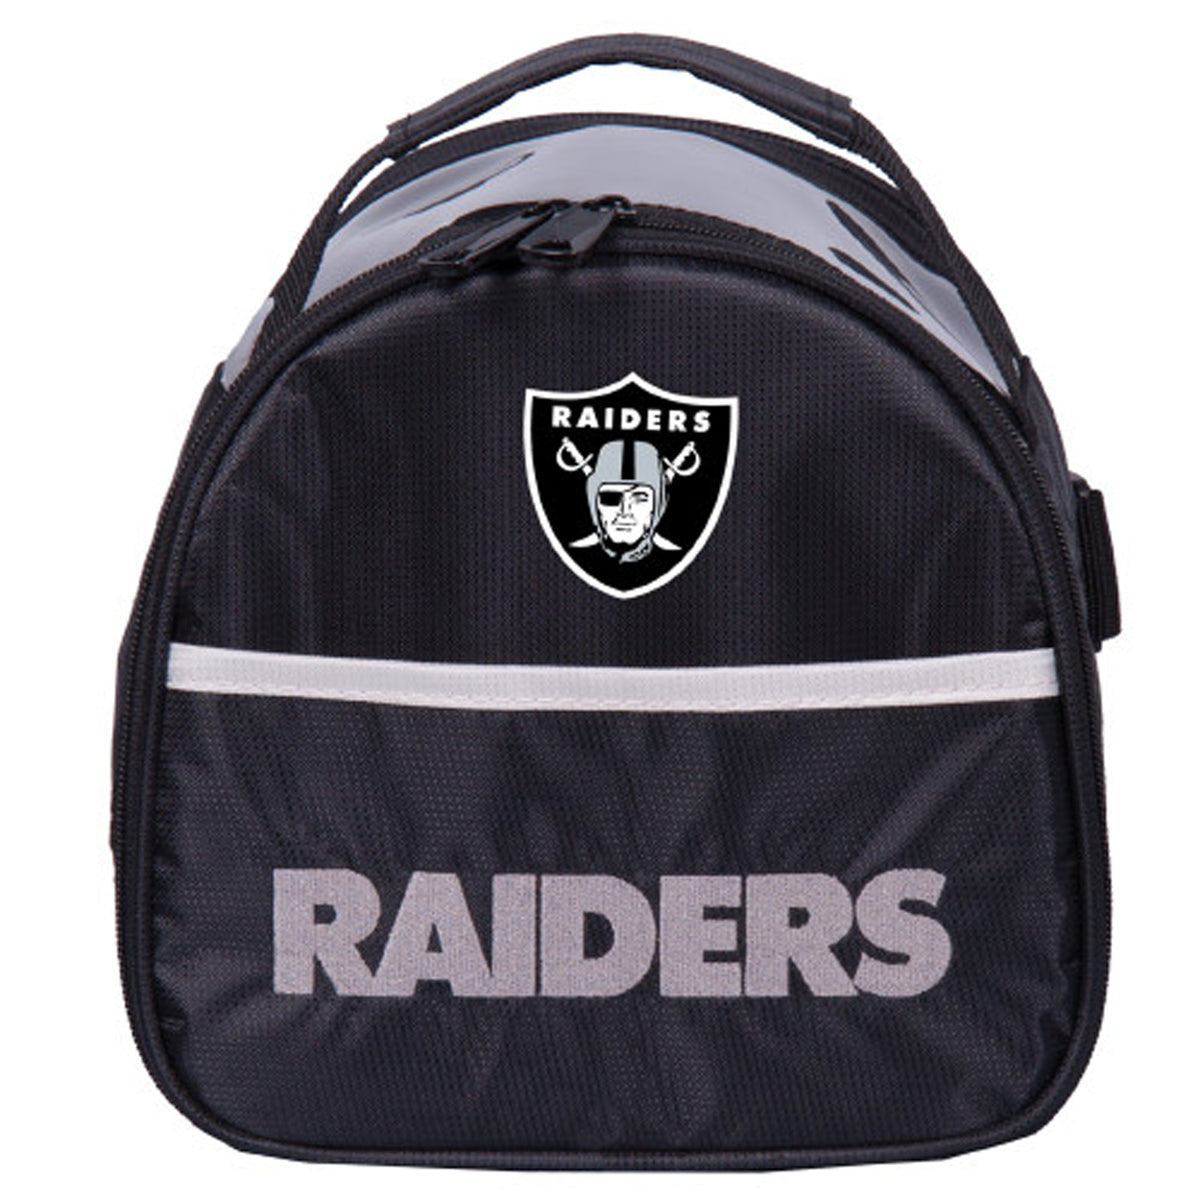 Oakland Raiders Add On Bag